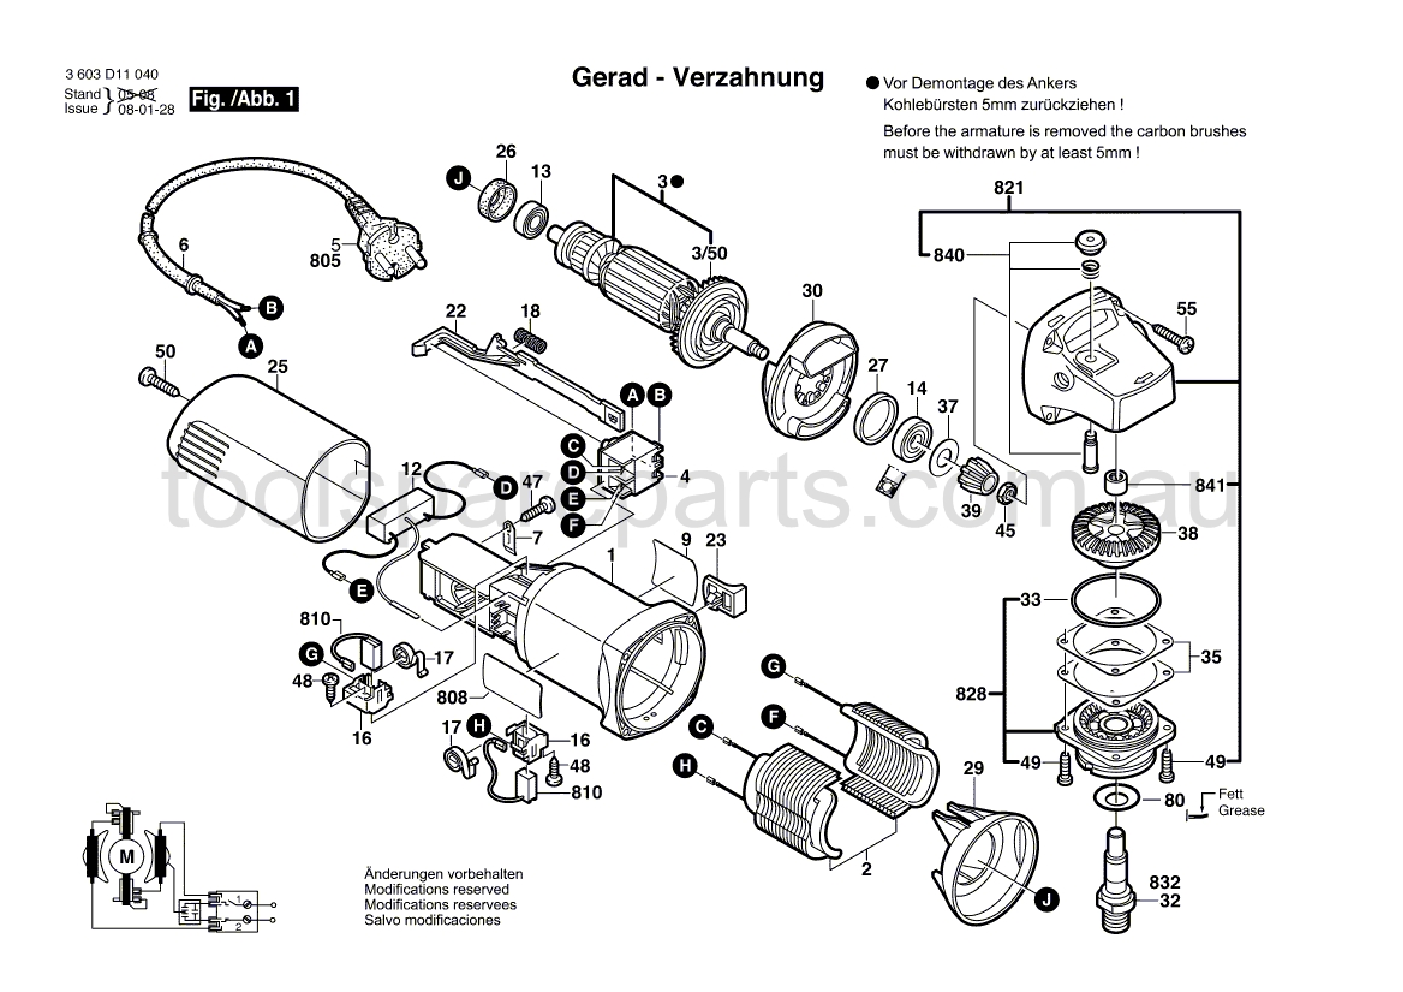 Bosch PWS 1500 3603D11140  Diagram 1